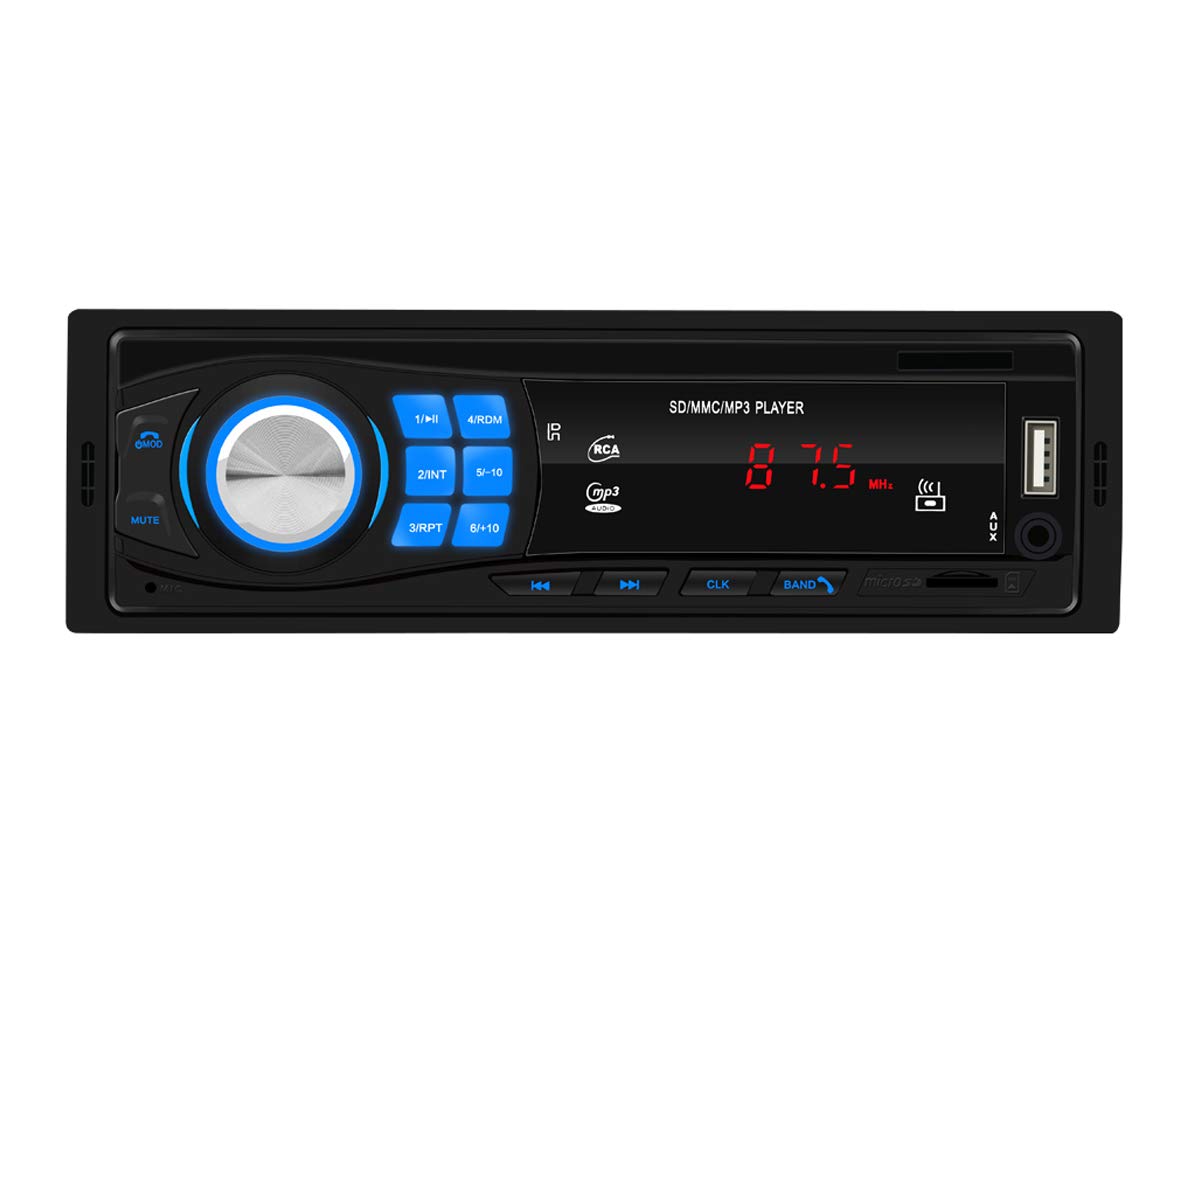 Mua Single Din Car Stereo 1 Din Car Radio with Bluetooth Audio Receiver,  Hands-Free Calling, SD/USB/Aux-in, Car FM Multimedia Player + Remote  Control Indash Radio MP3 Player trên Amazon Mỹ chính hãng